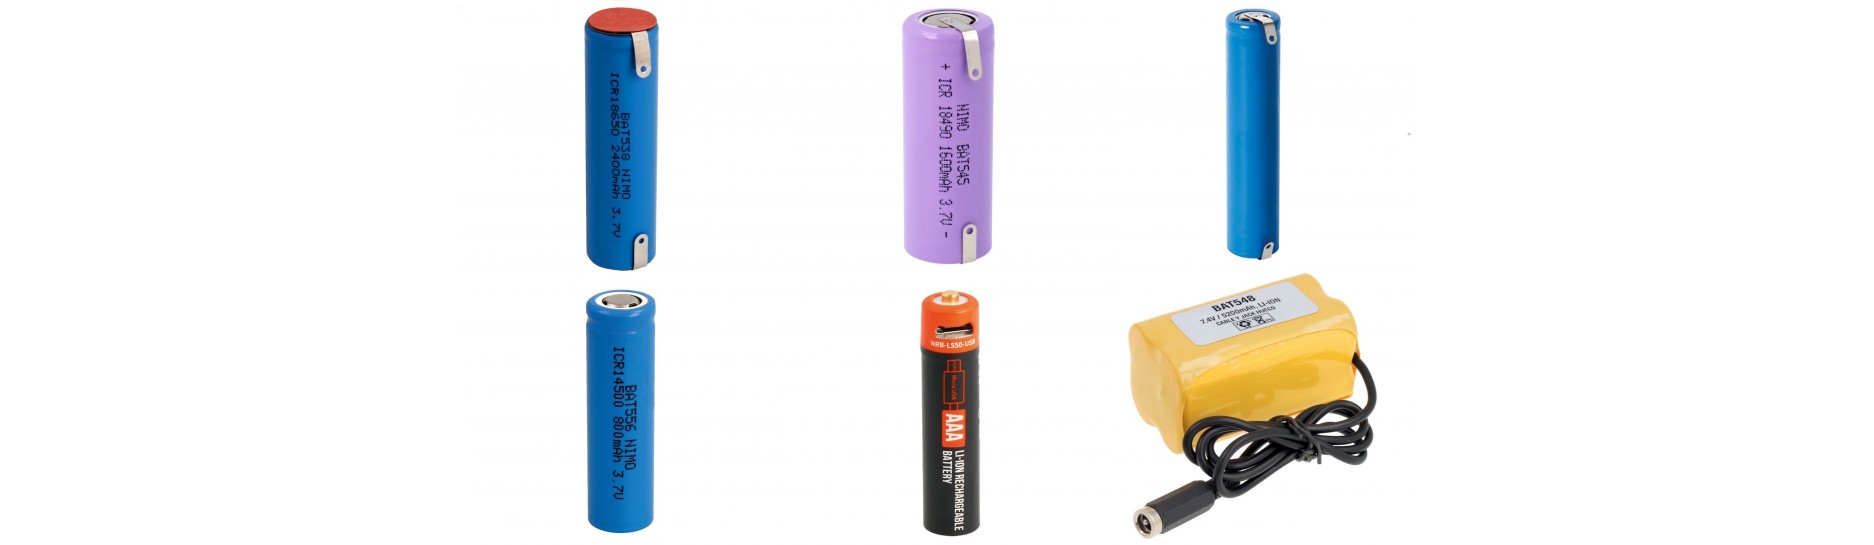 Baterías y Packs de Litio | Comprar Baterías de Litio